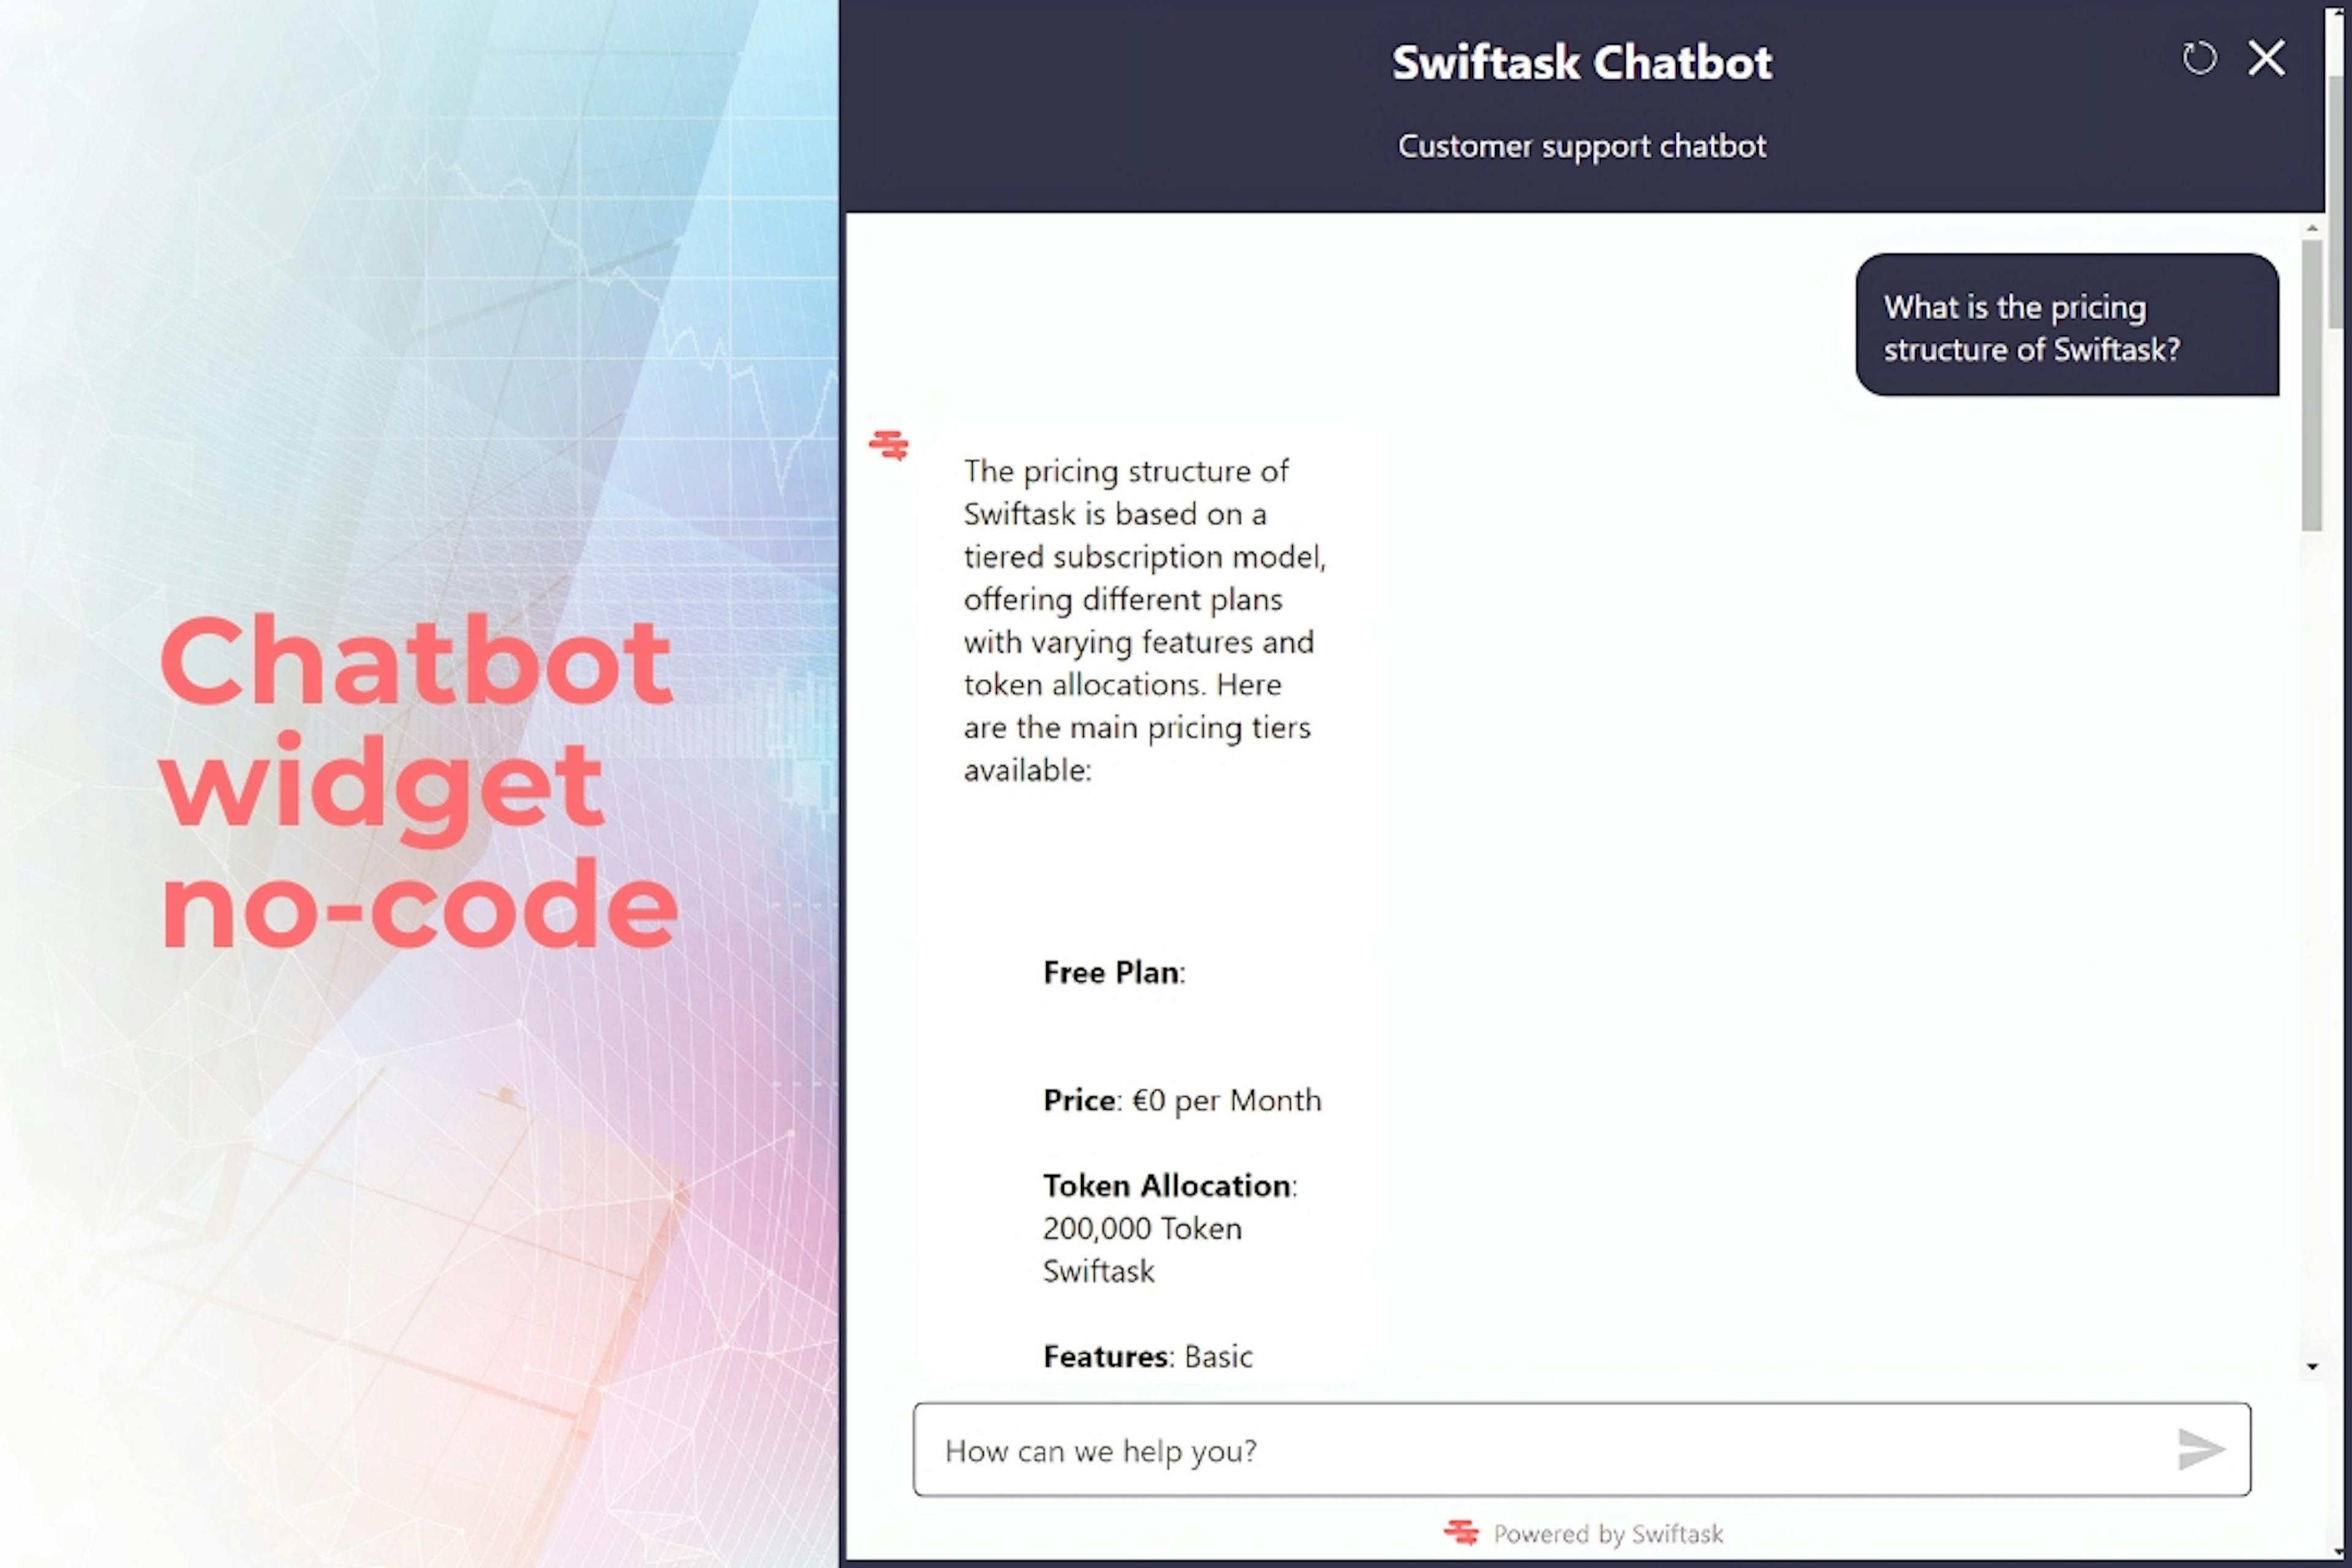 Chatbot widget no-code